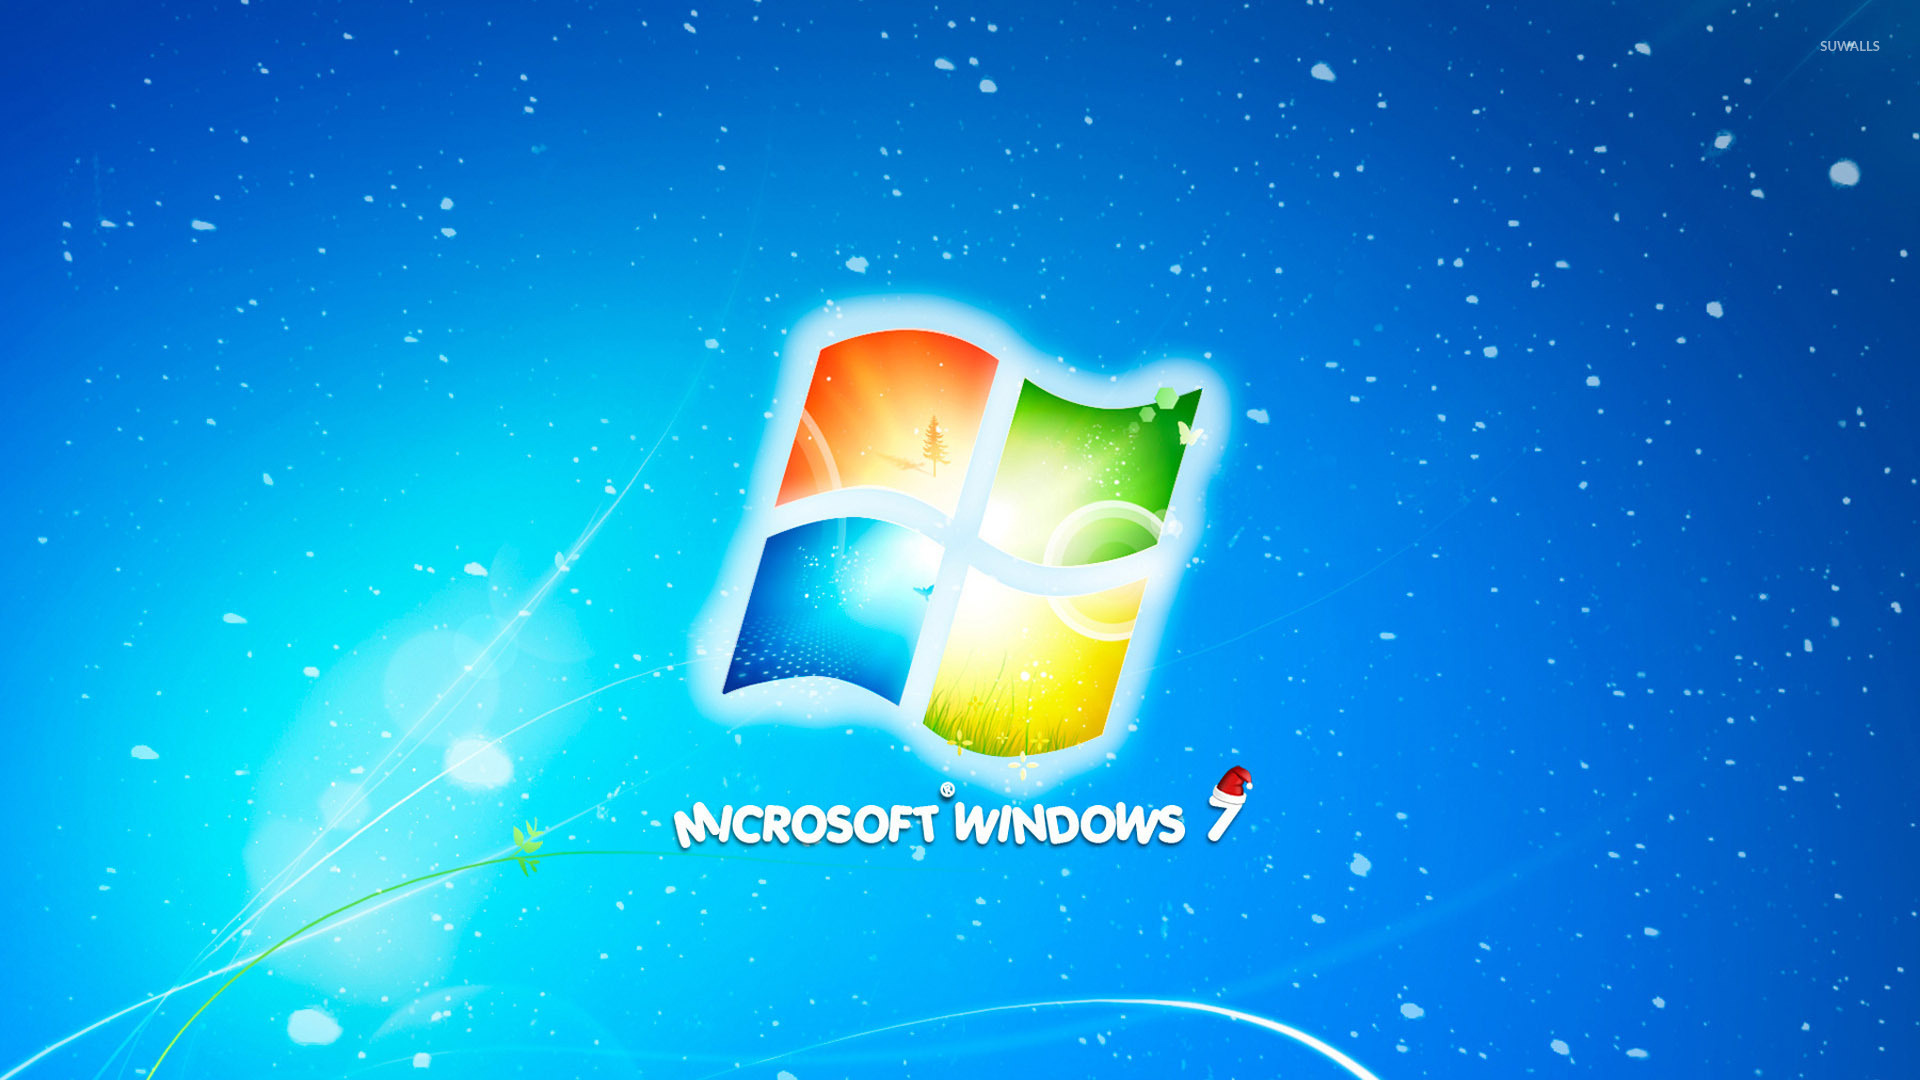 Windows 7 Christmas Wallpaper Hd - HD Wallpaper 